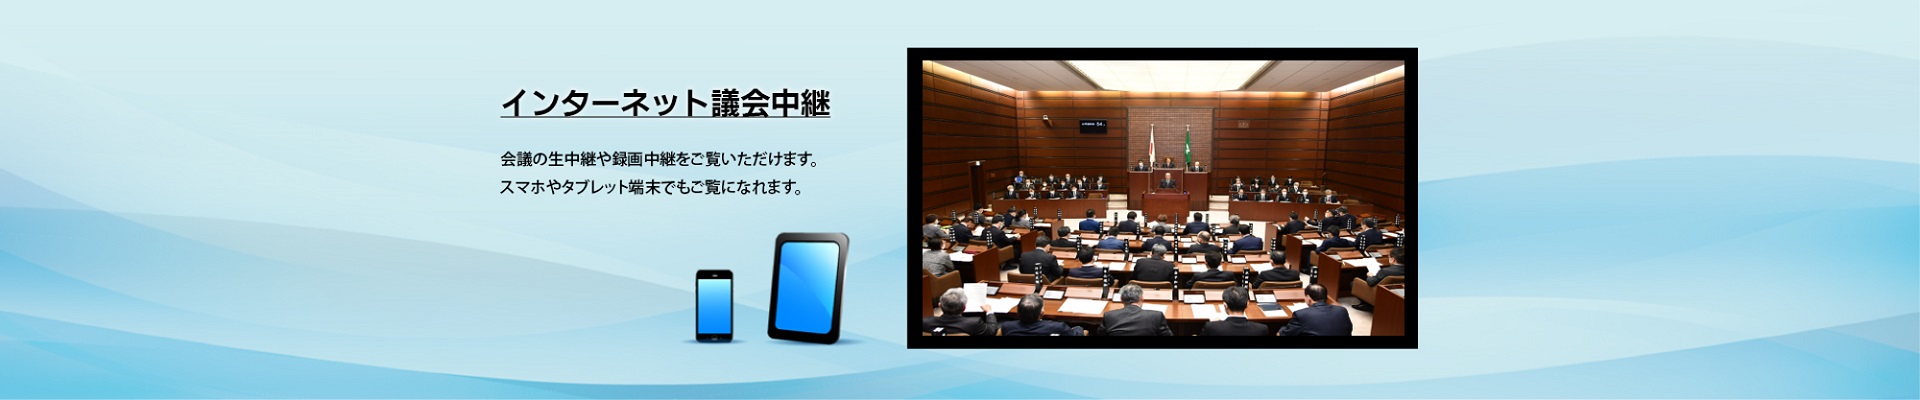 広島市議会 広島市公式ホームページ